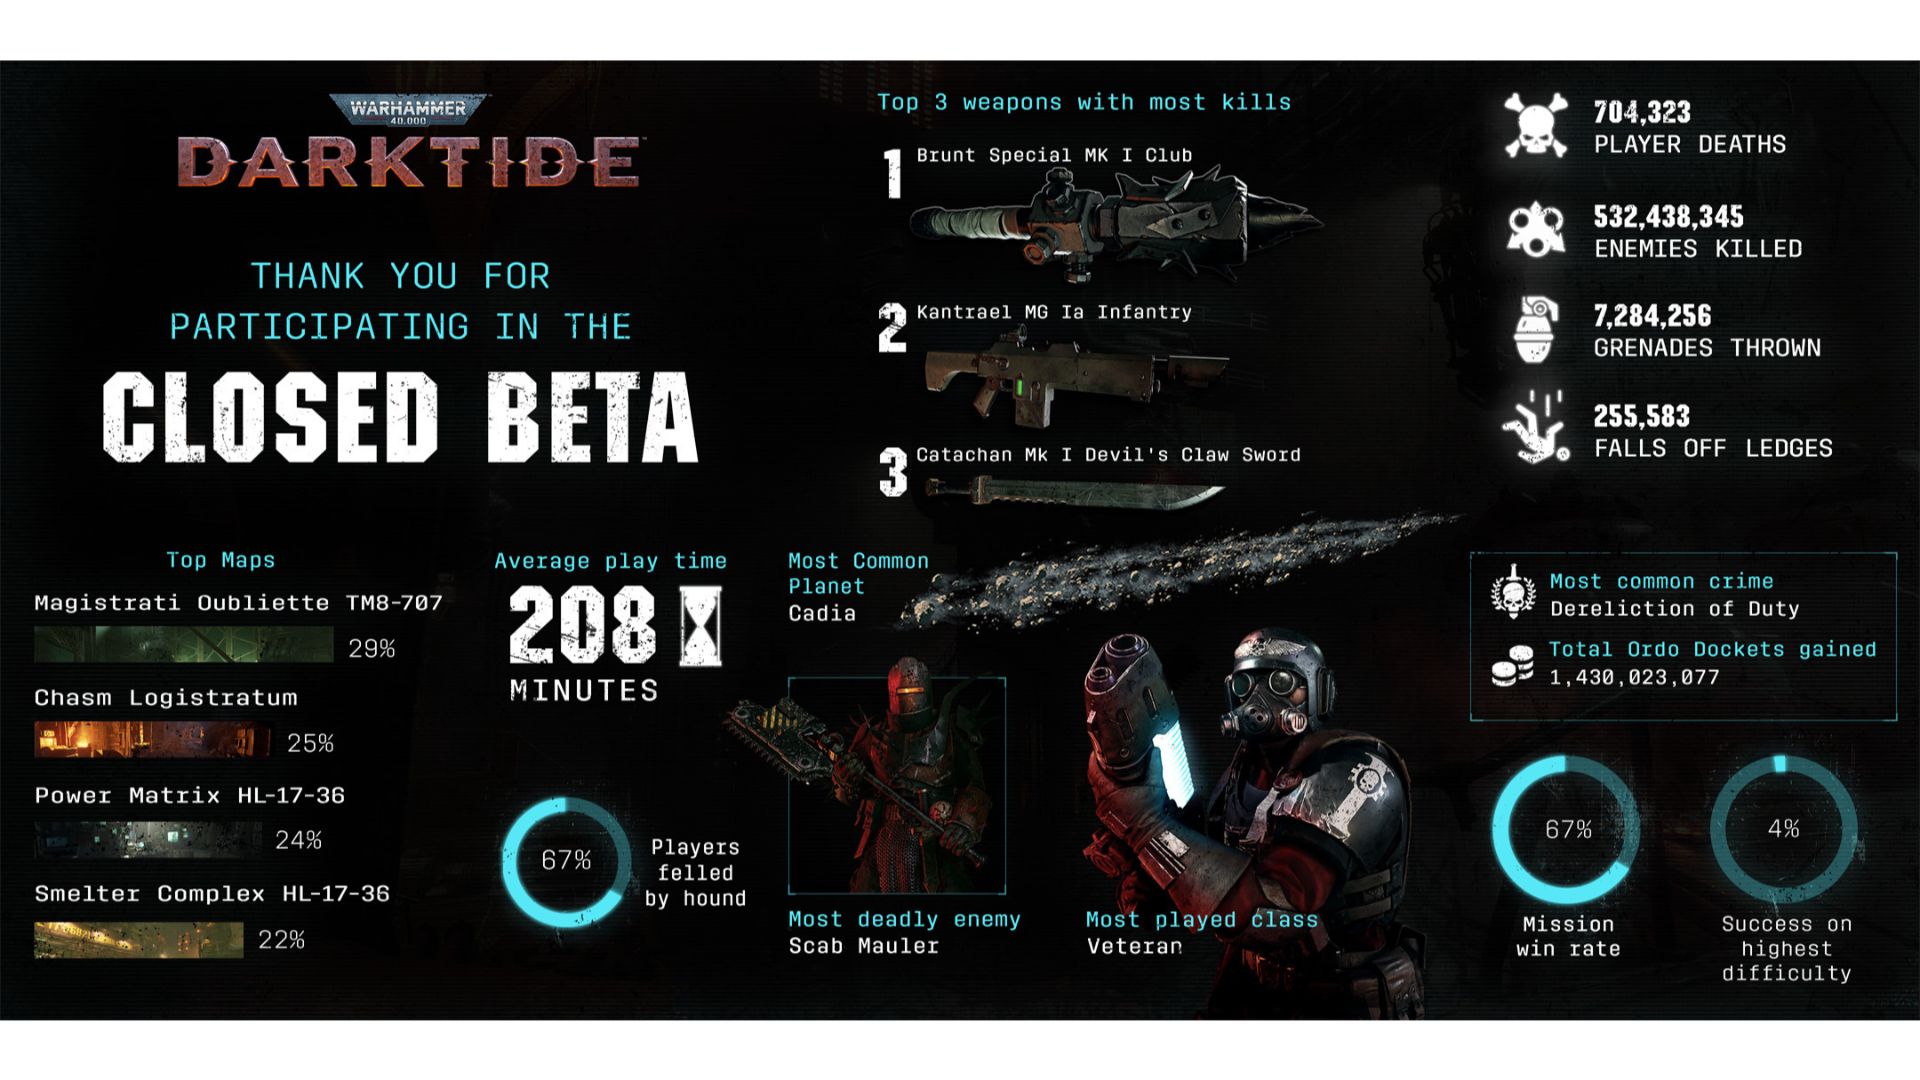 Warhammer 40K Darktide Best Weapons: The stat sheet can be seen